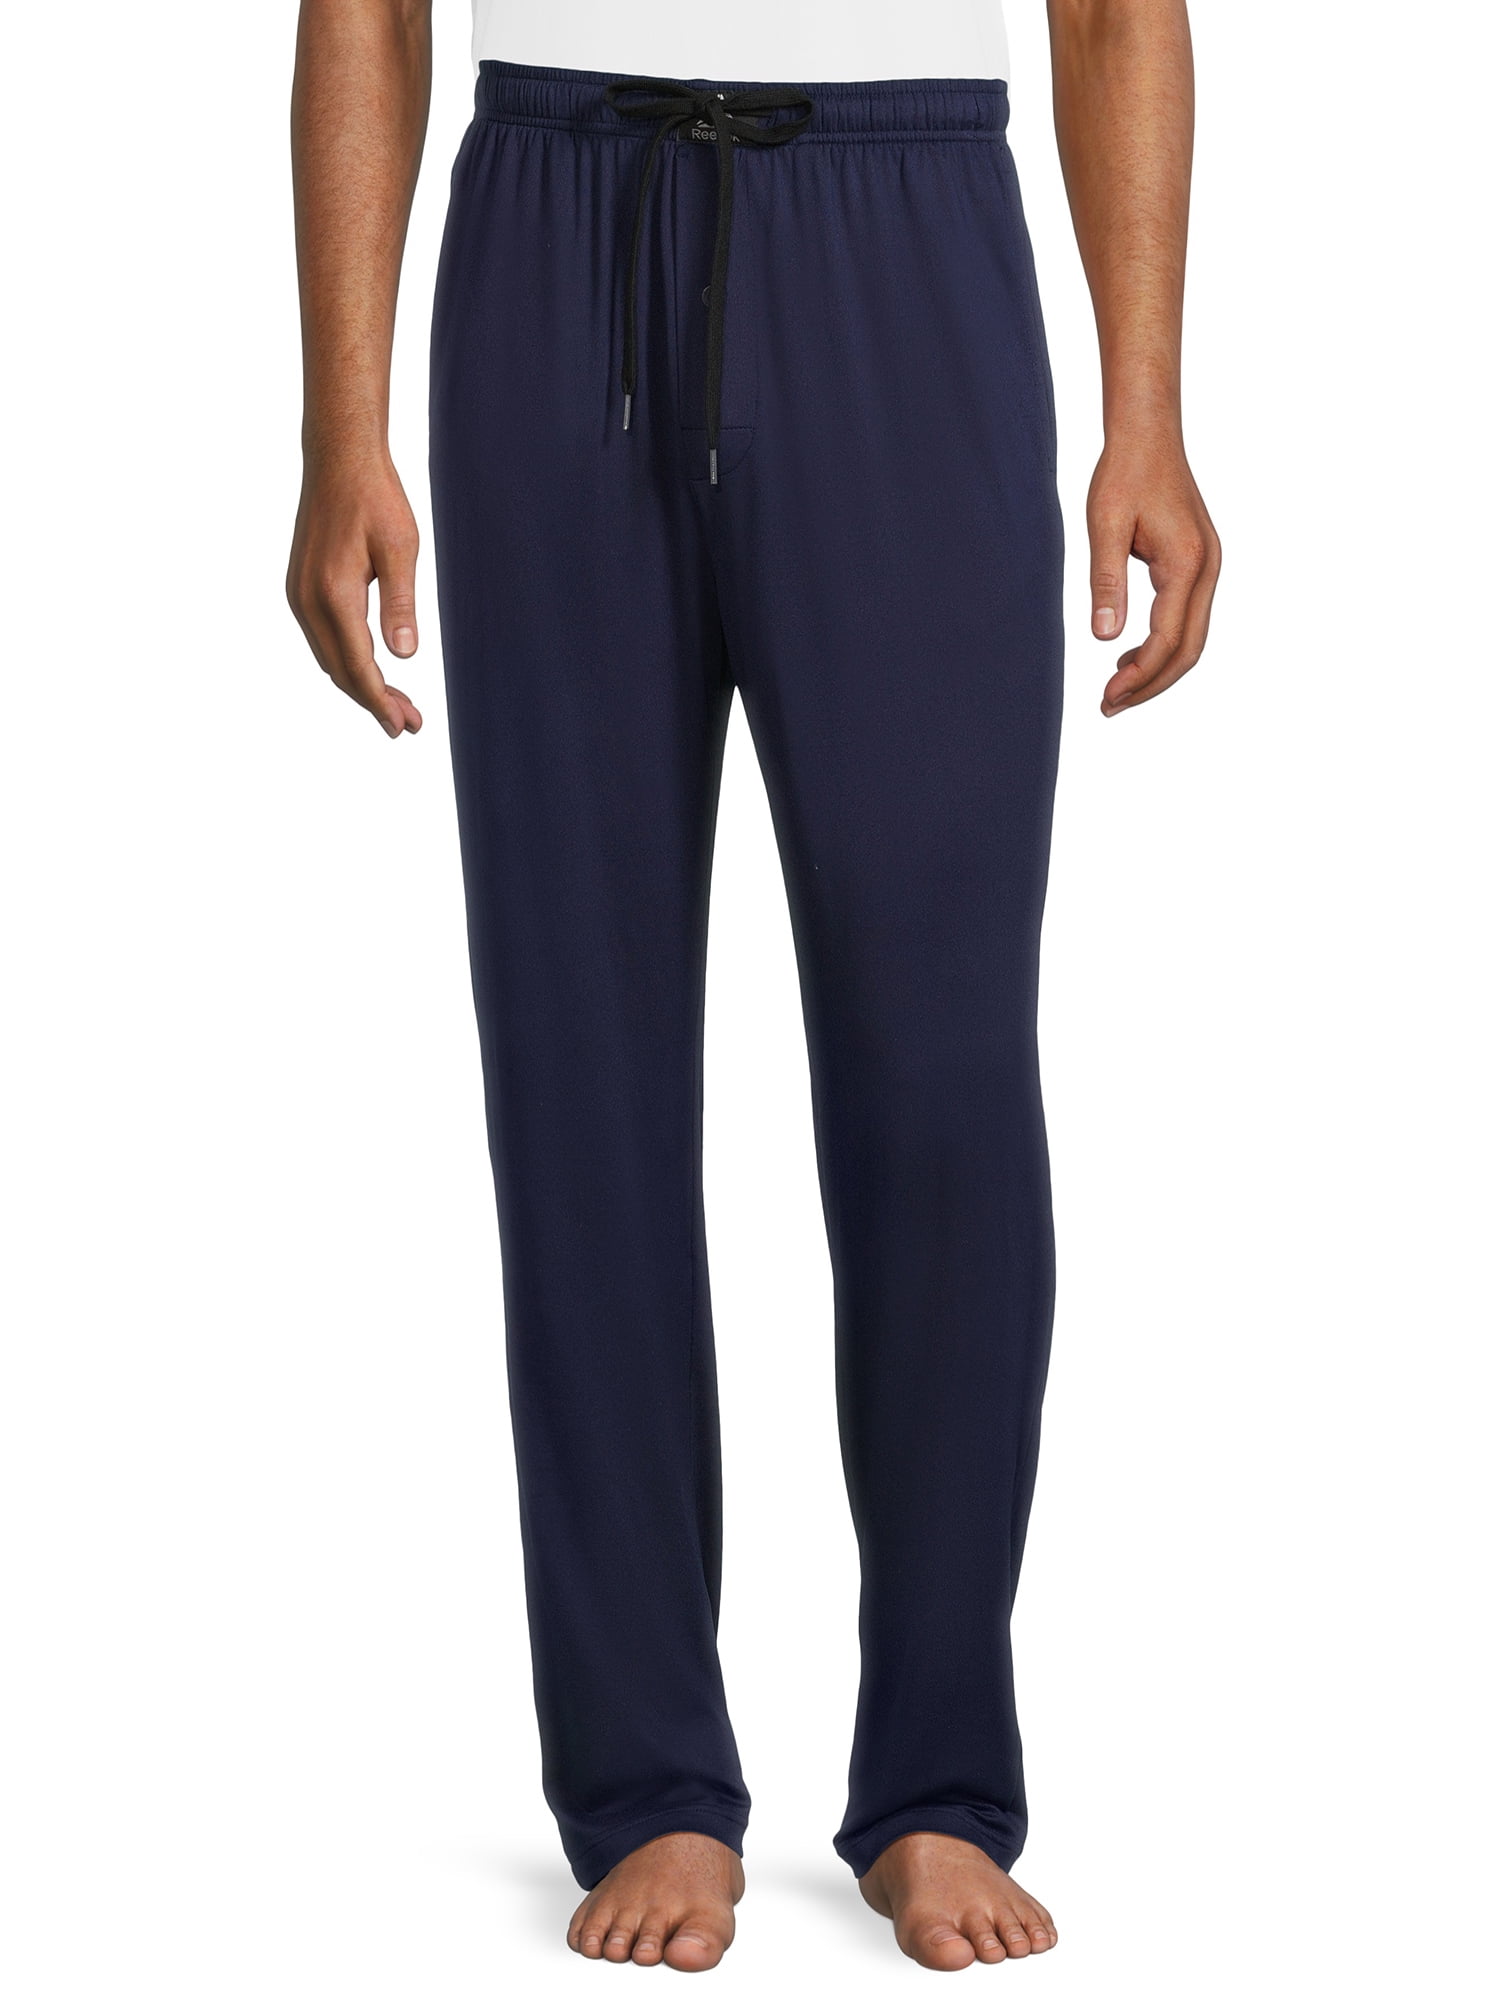 Reebok Men's Brushed Jersey Knit Sleep Pants - Walmart.com